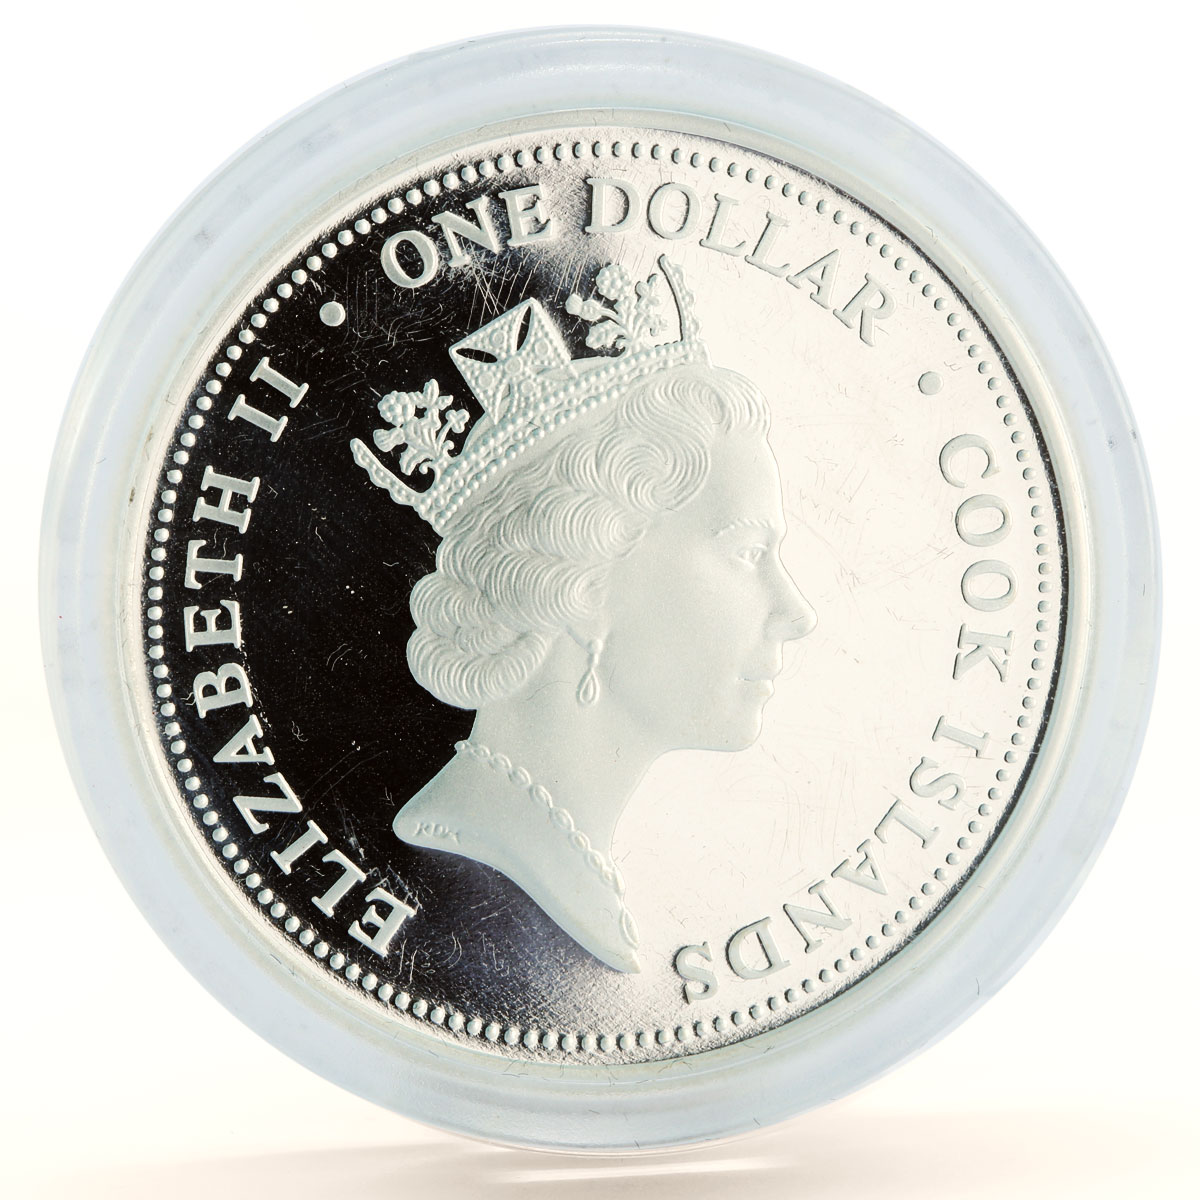 Cook Islands 1 dollar The First Australian Steam Train Railway silver coin 2004